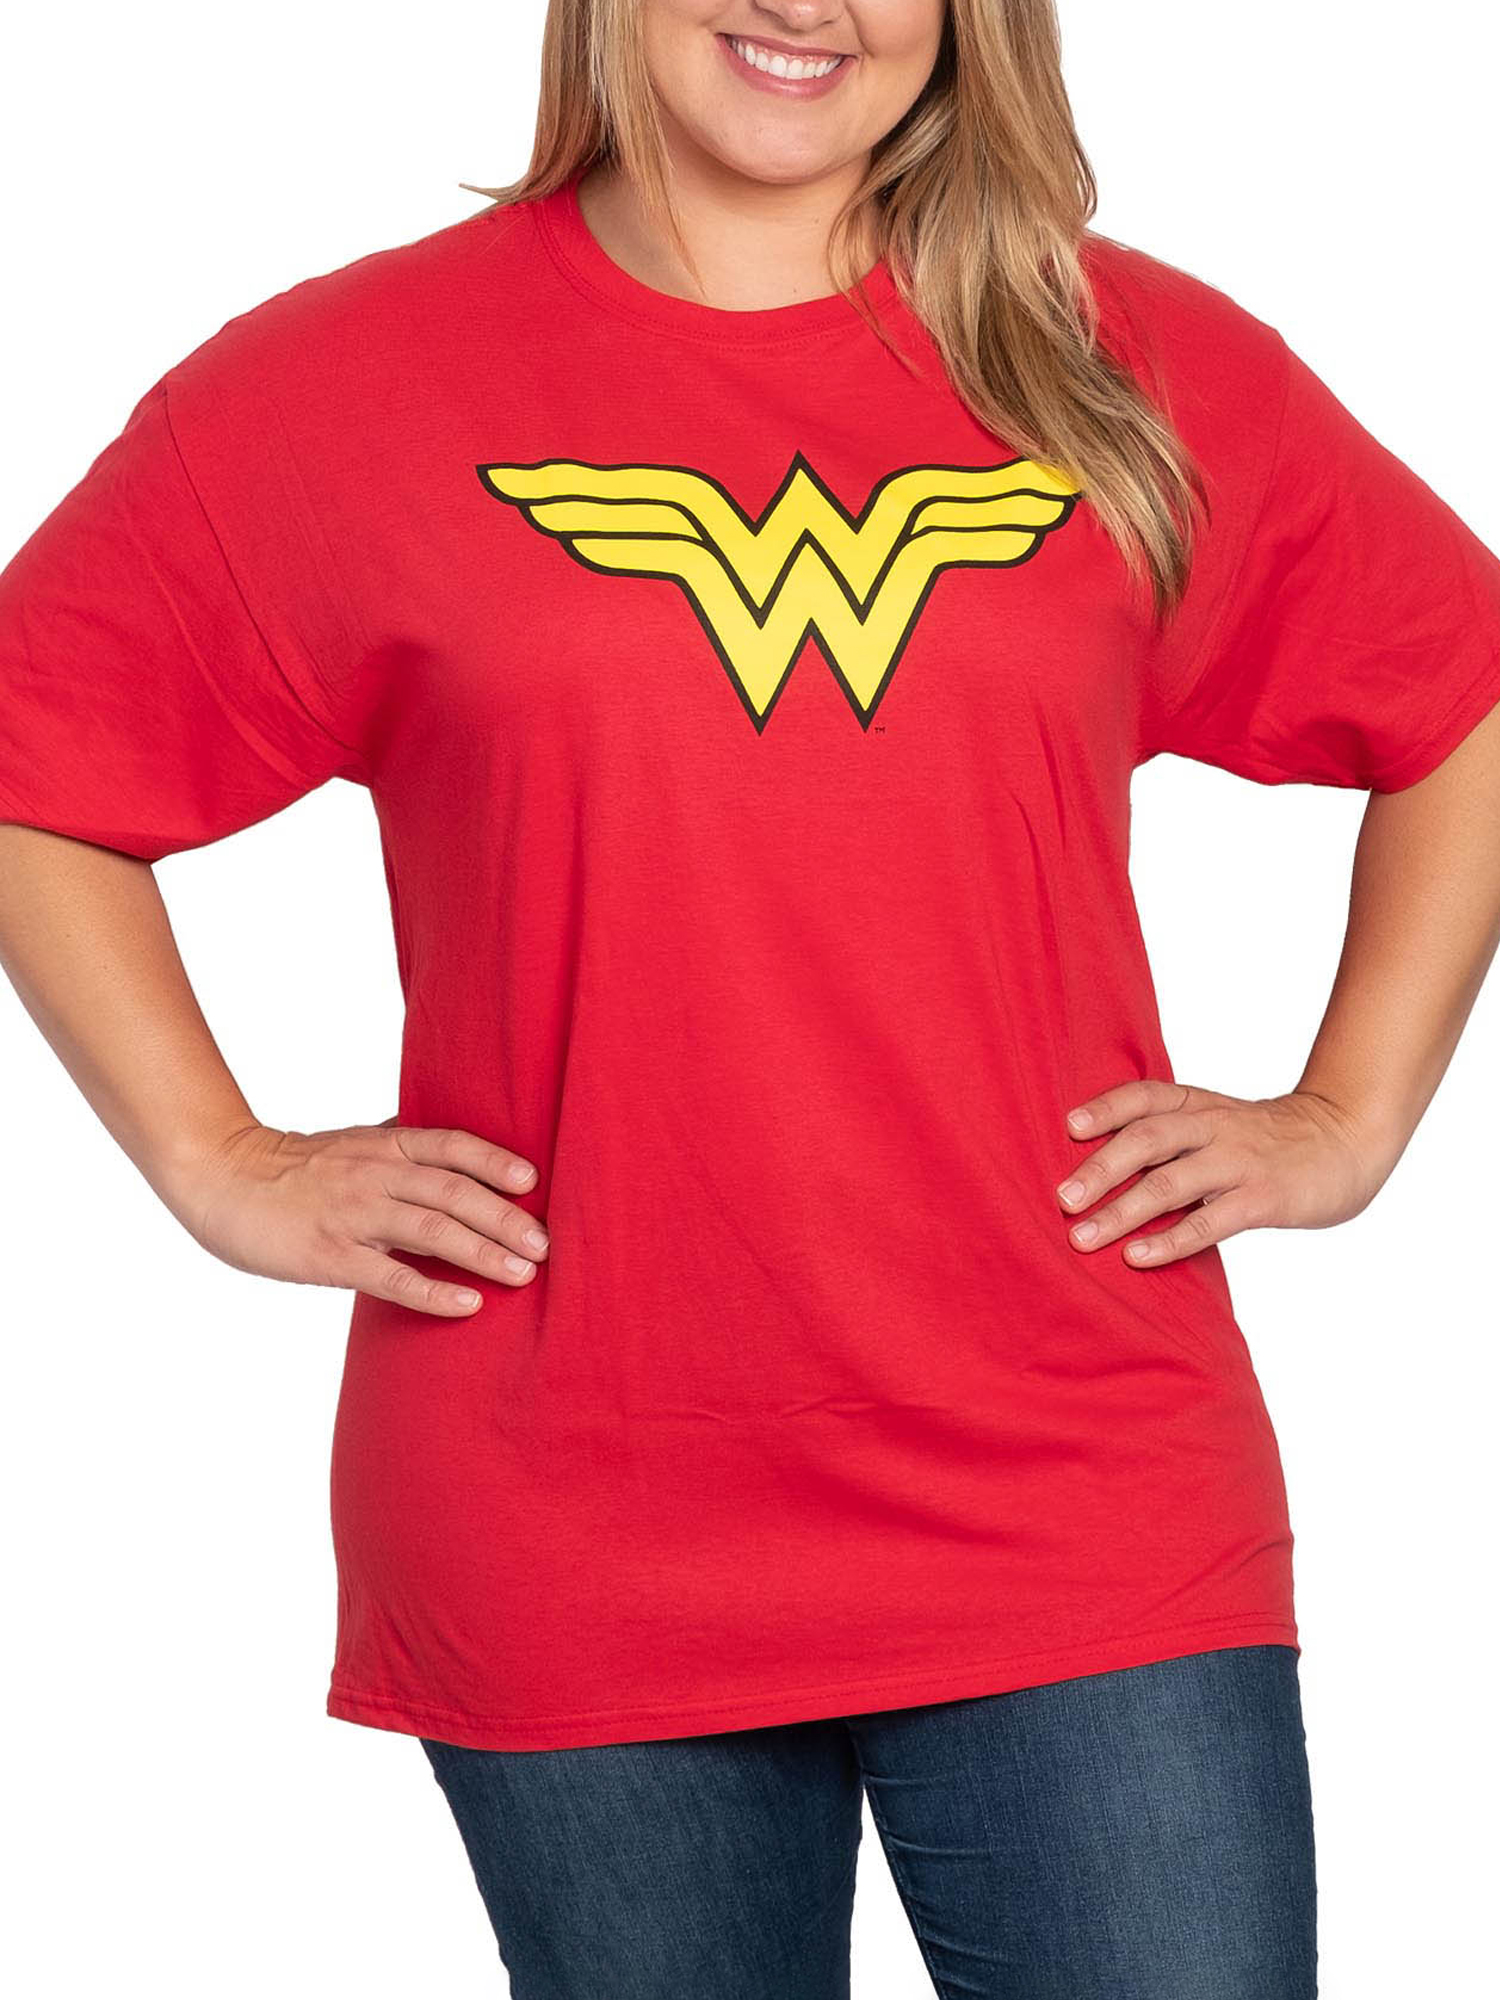 DC Comics Wonder Woman Short Sleeve T-Shirt Red (Women's Plus) - image 2 of 4